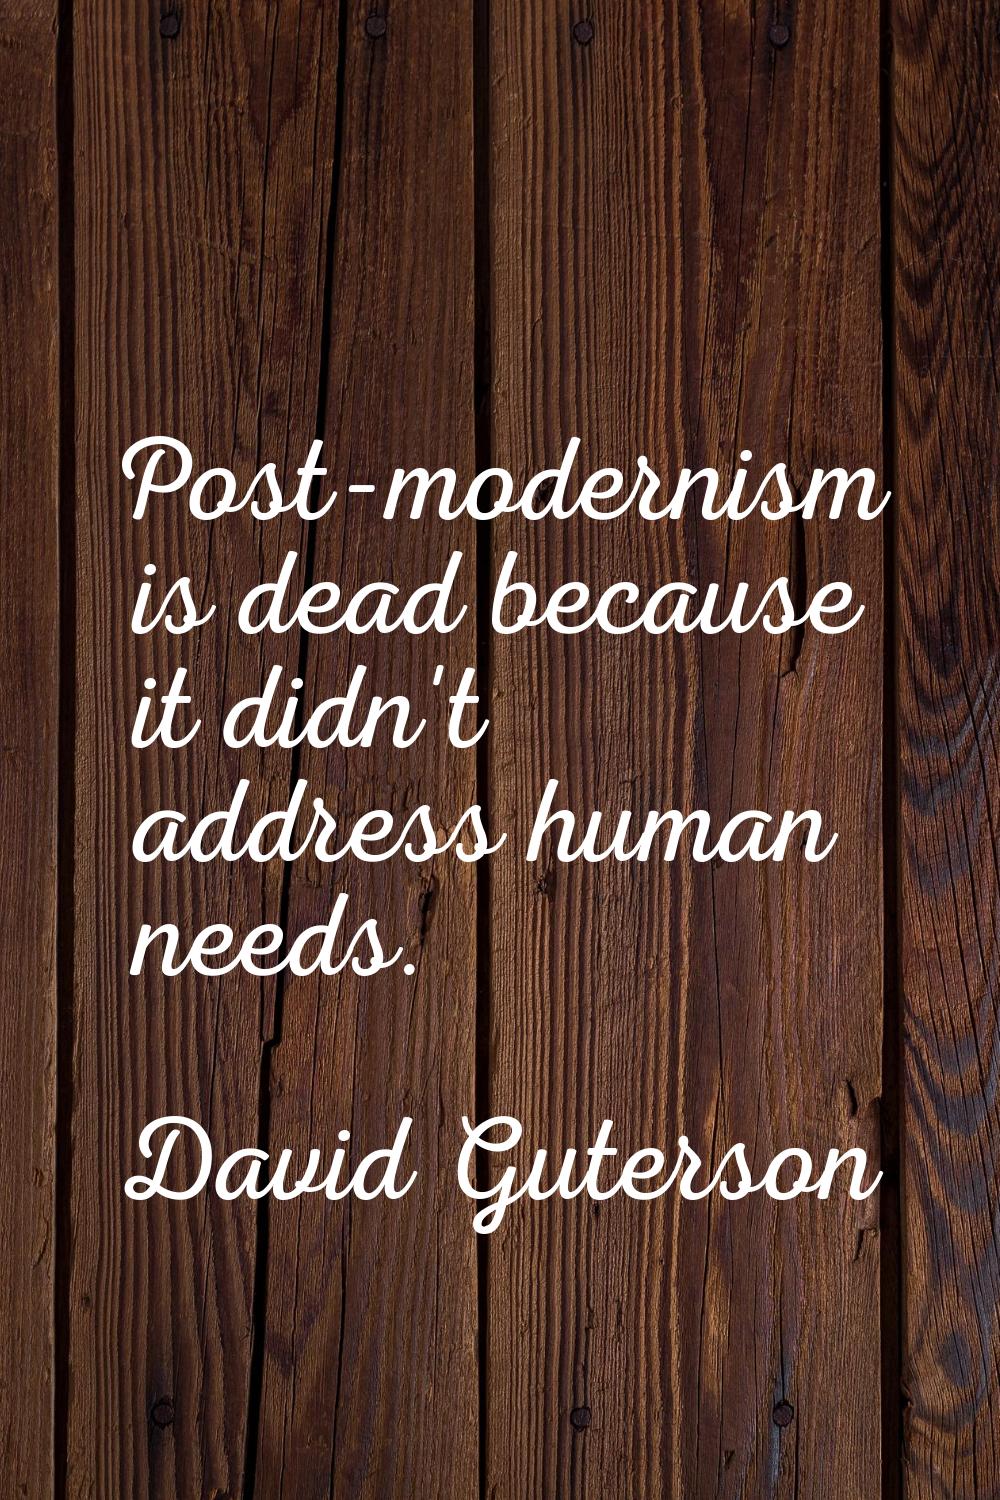 Post-modernism is dead because it didn't address human needs.